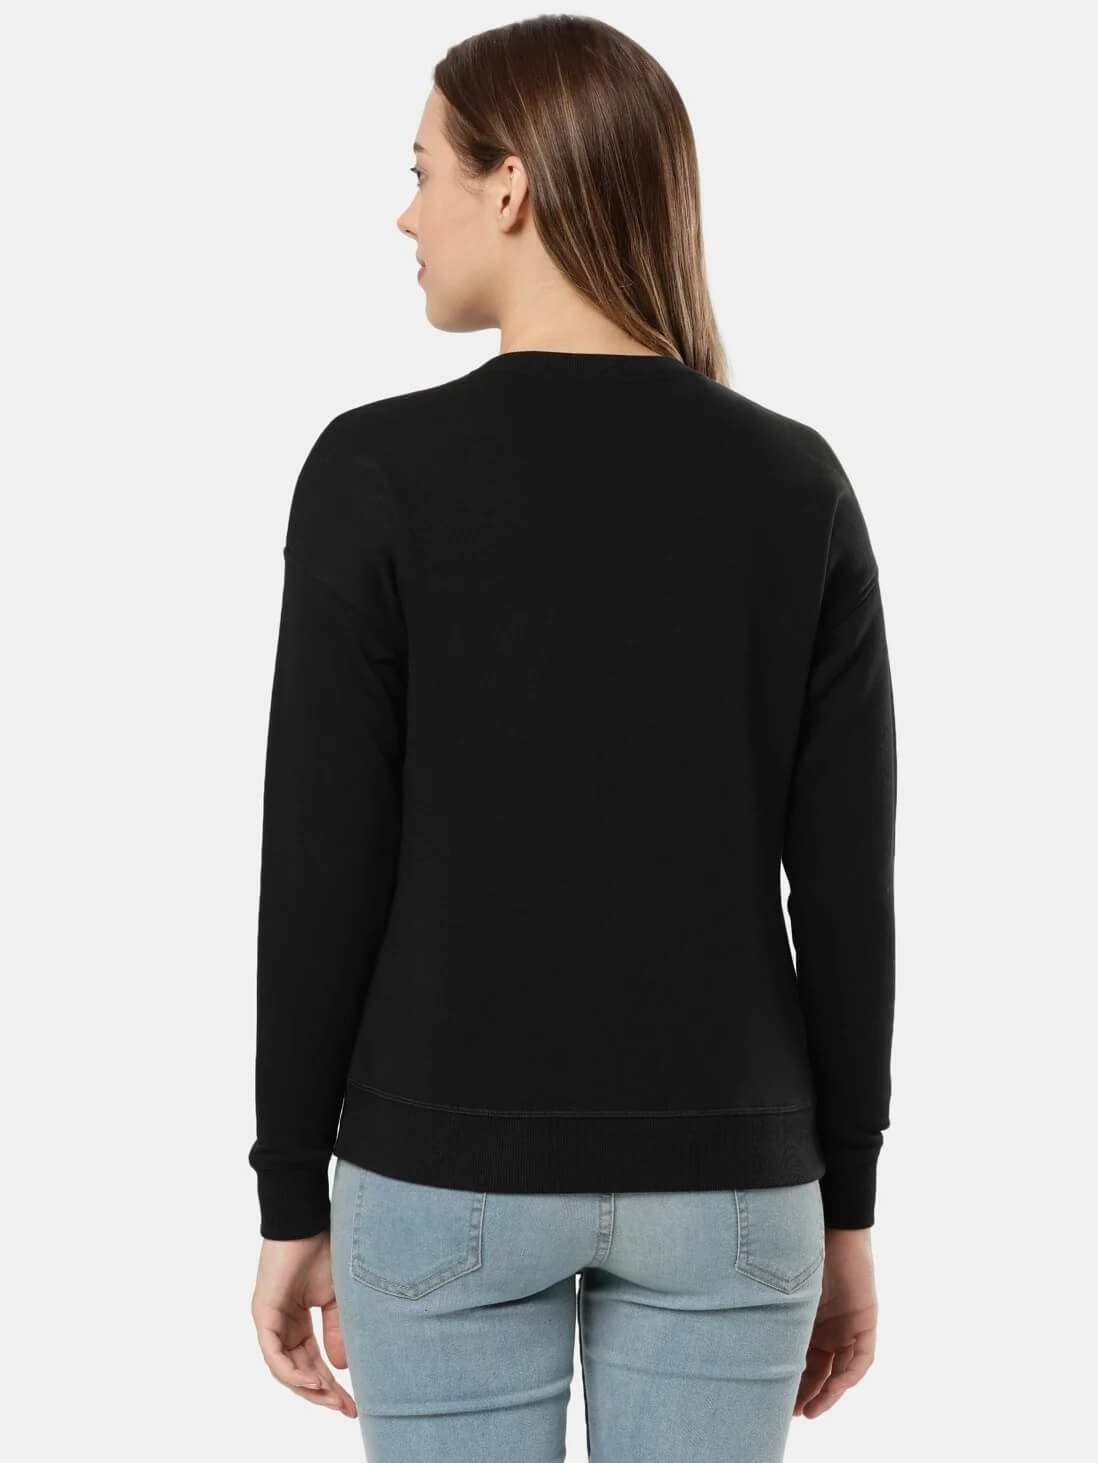 black sweatshirt for women